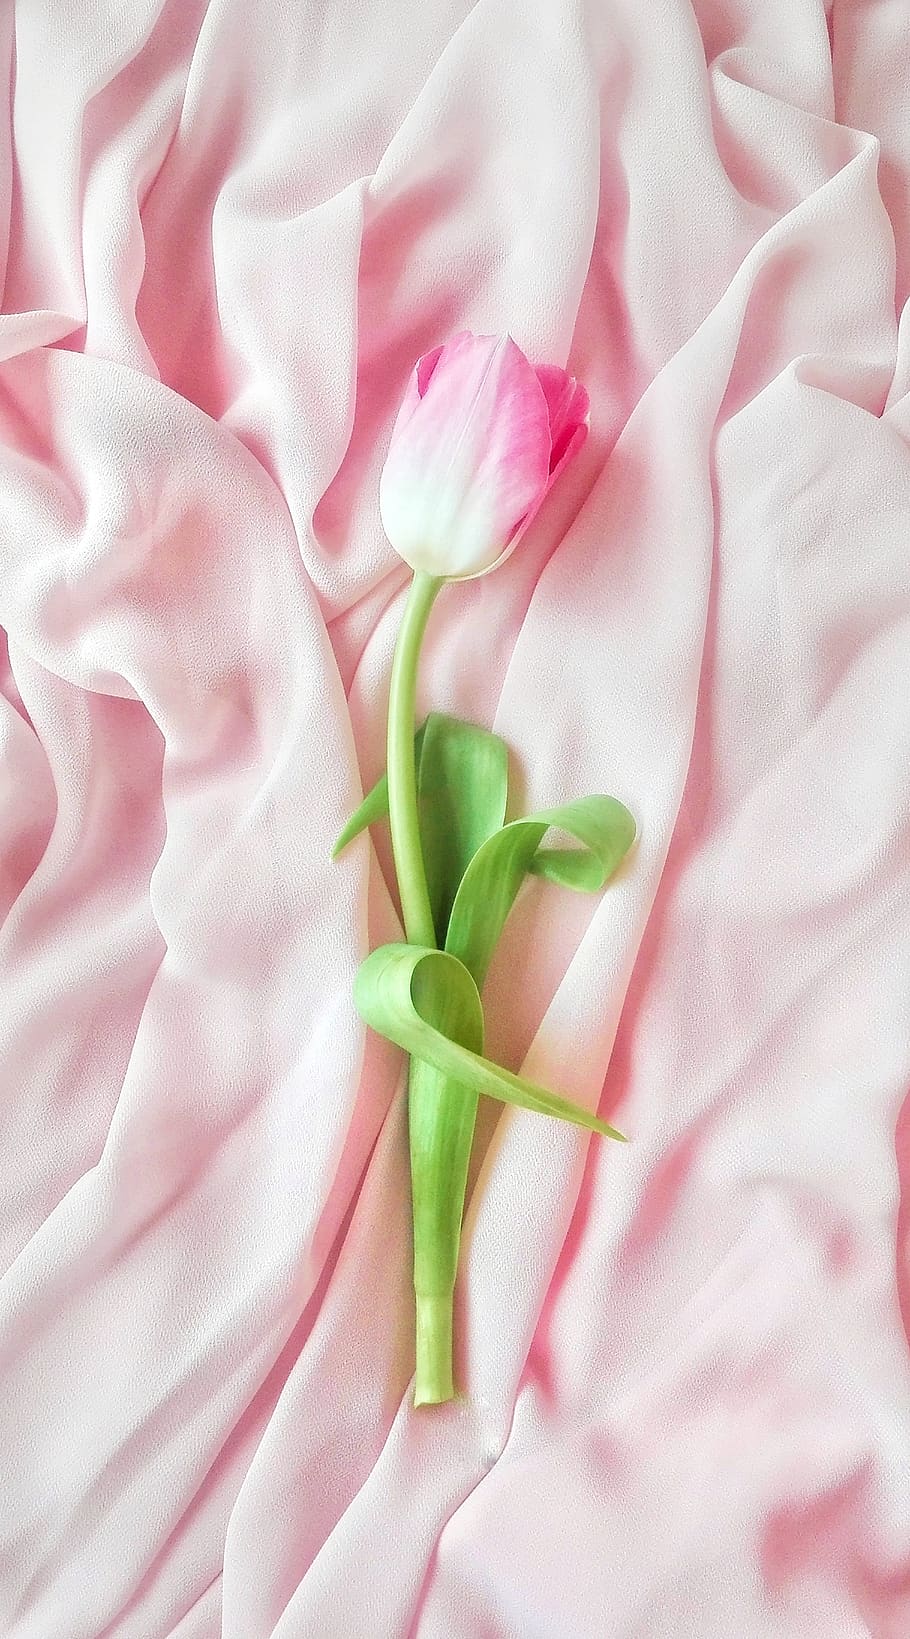 flor, planta, natureza, tulipa, flora, 8 de março, minimalismo, rosa, ternura, beleza natural